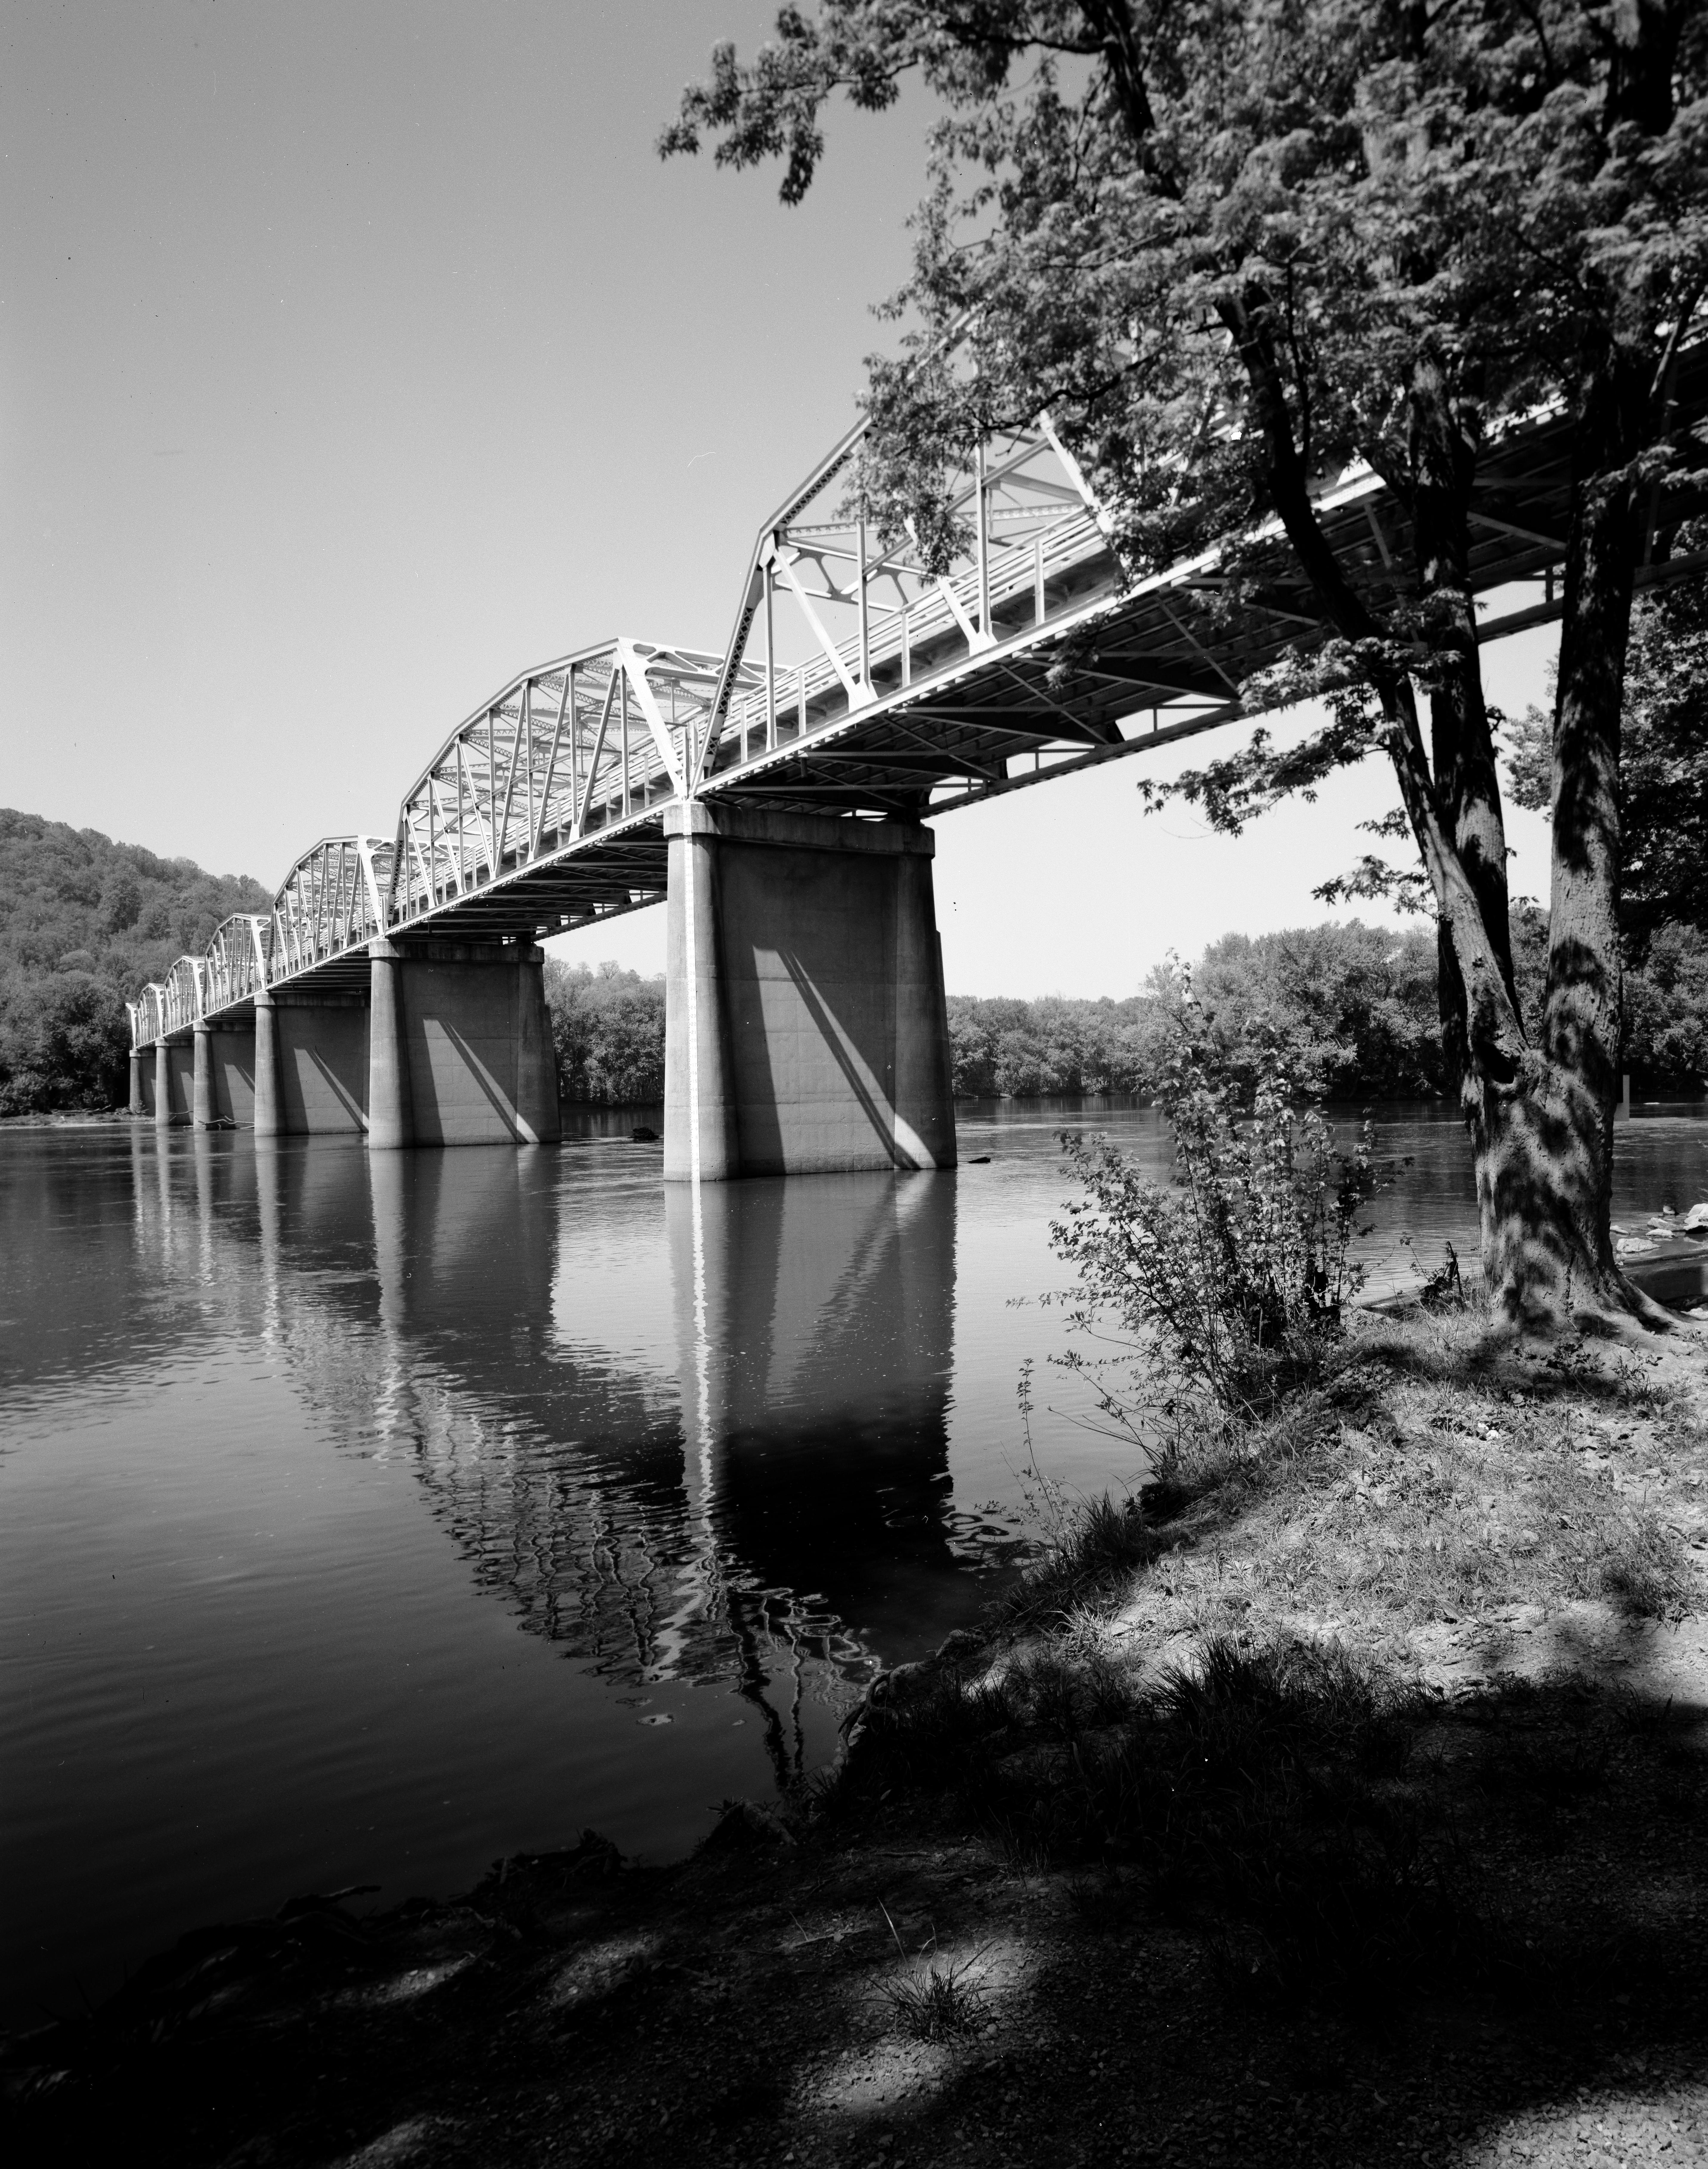 greyscale photography of full suspension bridge